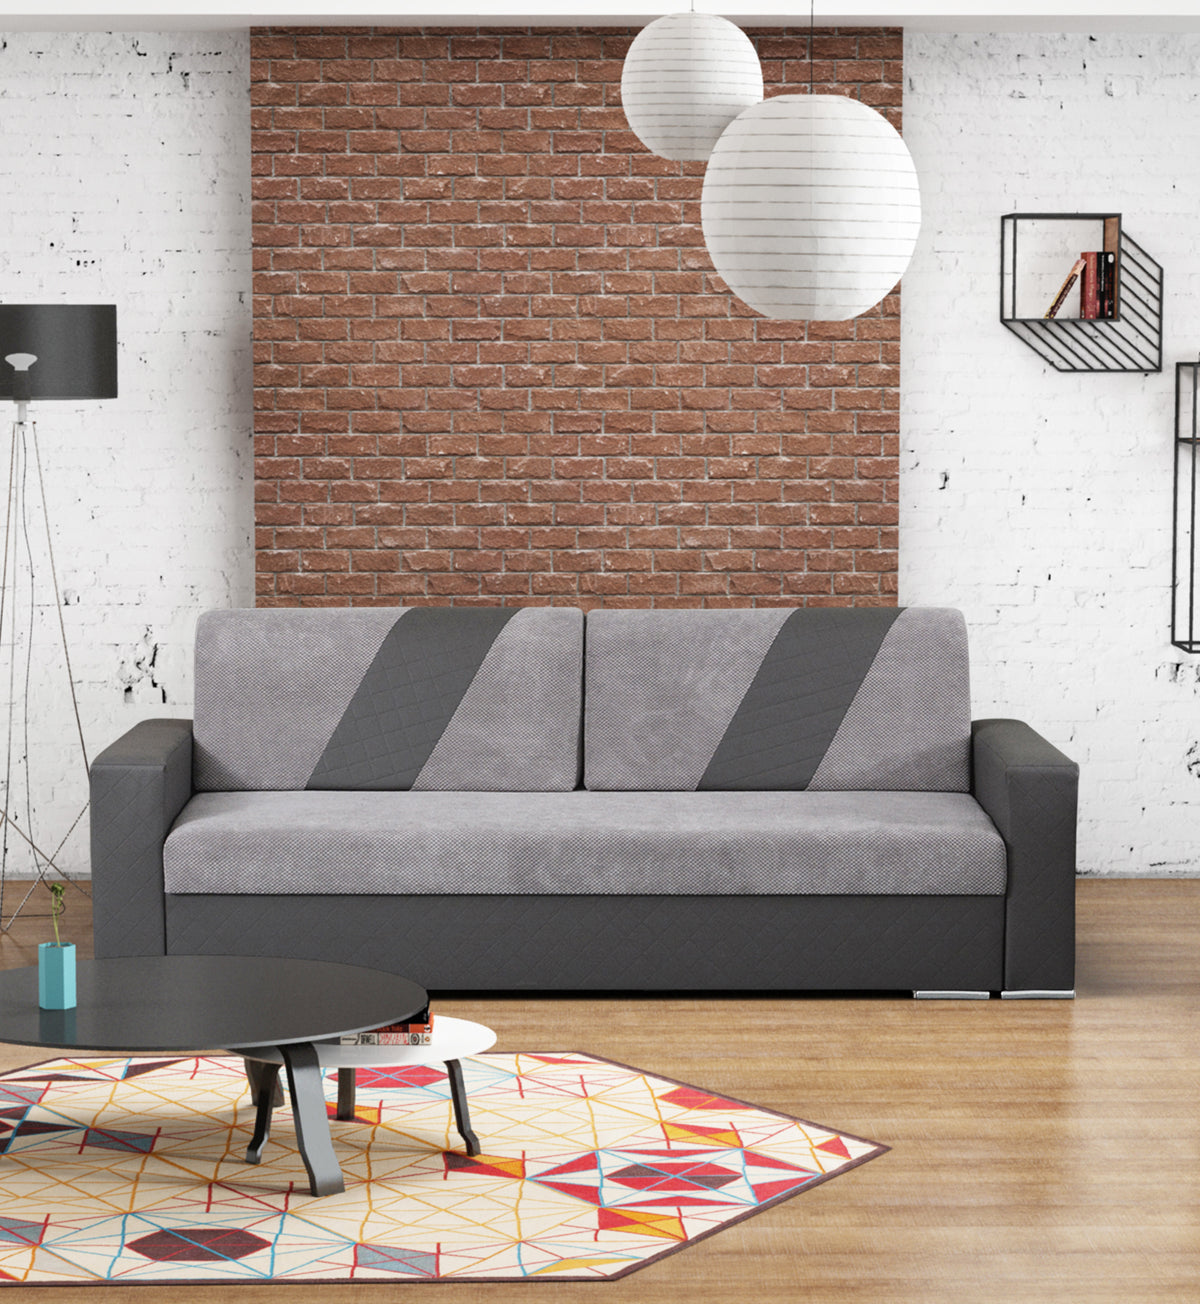 Skyler Designs Ines Gray Sofa Bed With Storage